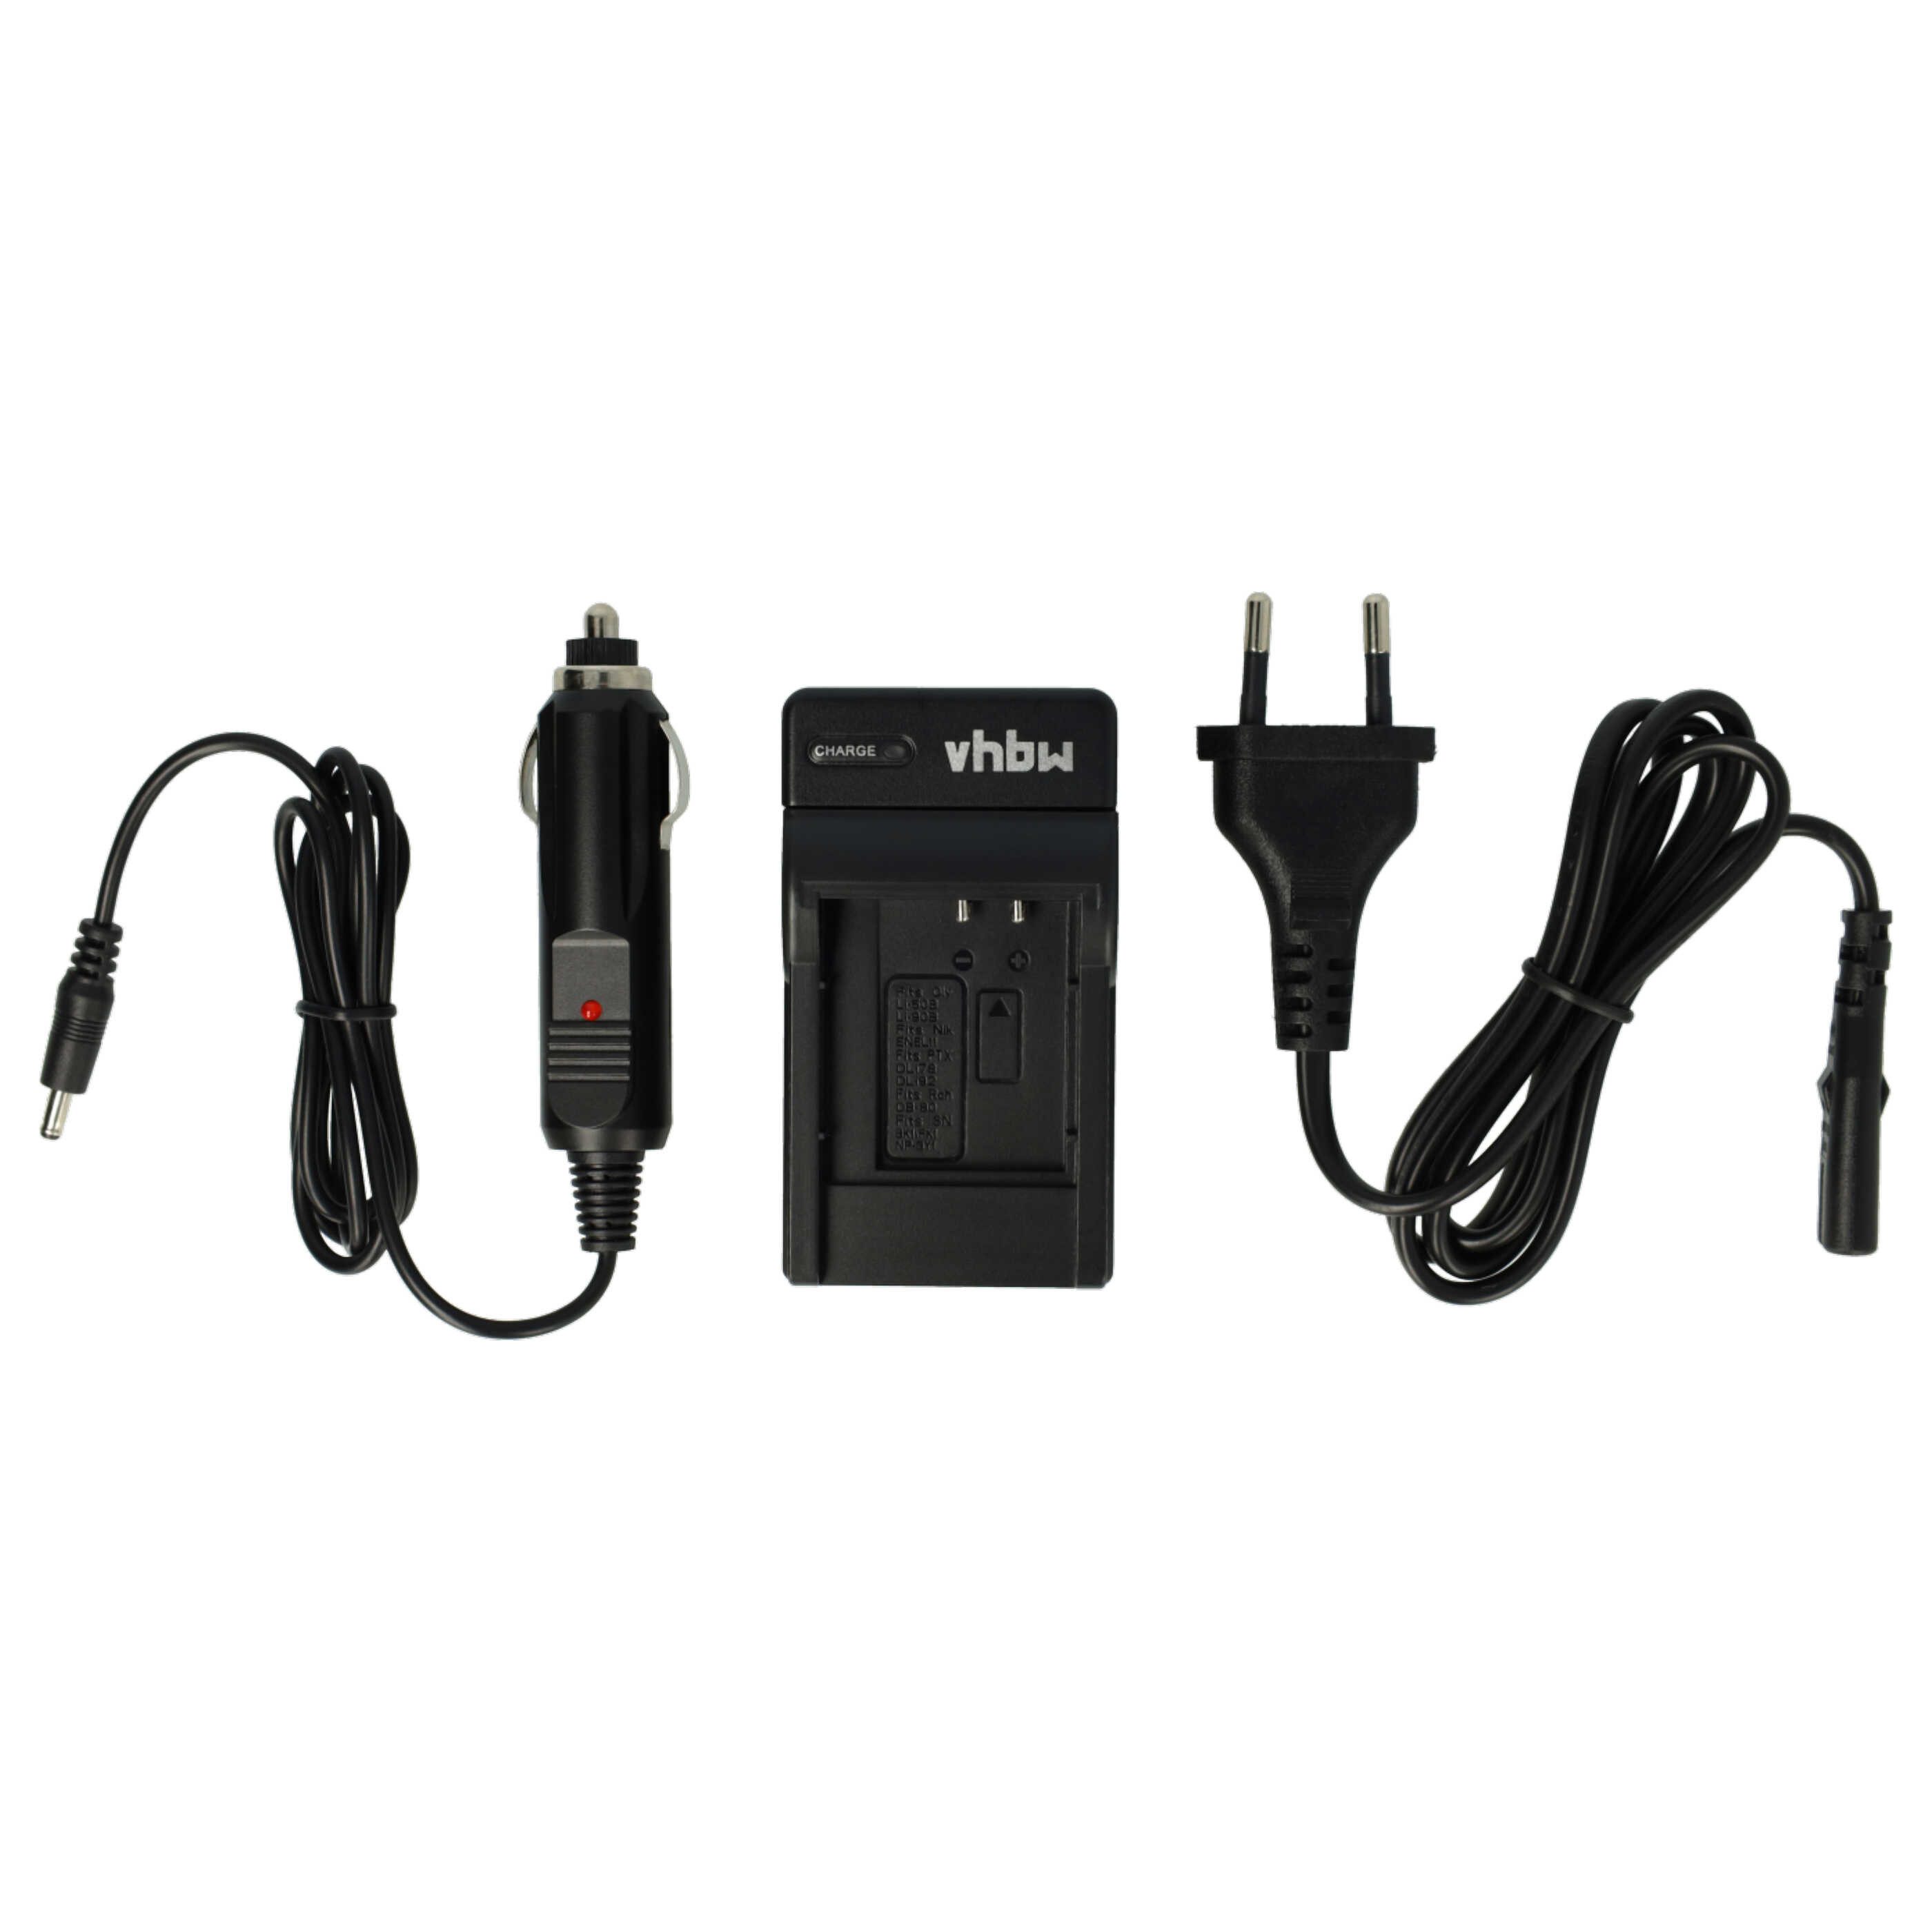 vhbw passend für Pentax Optio W80, W60, M50, L50, S1, M60, V20 Kamera / Kamera-Ladegerät